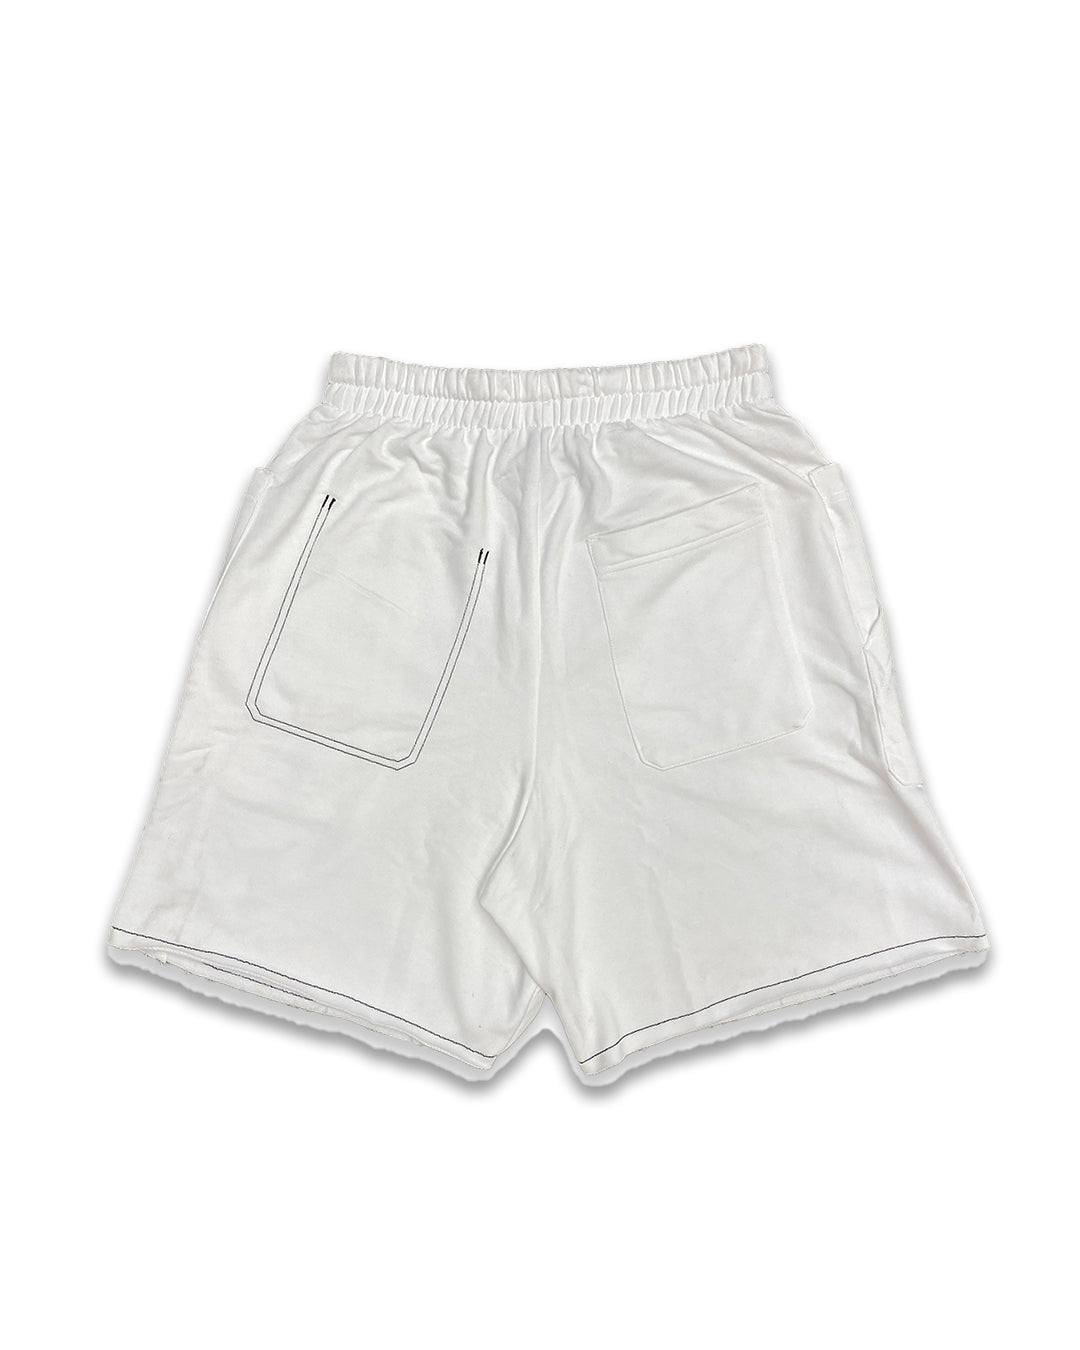 Dust Staples White Shorts